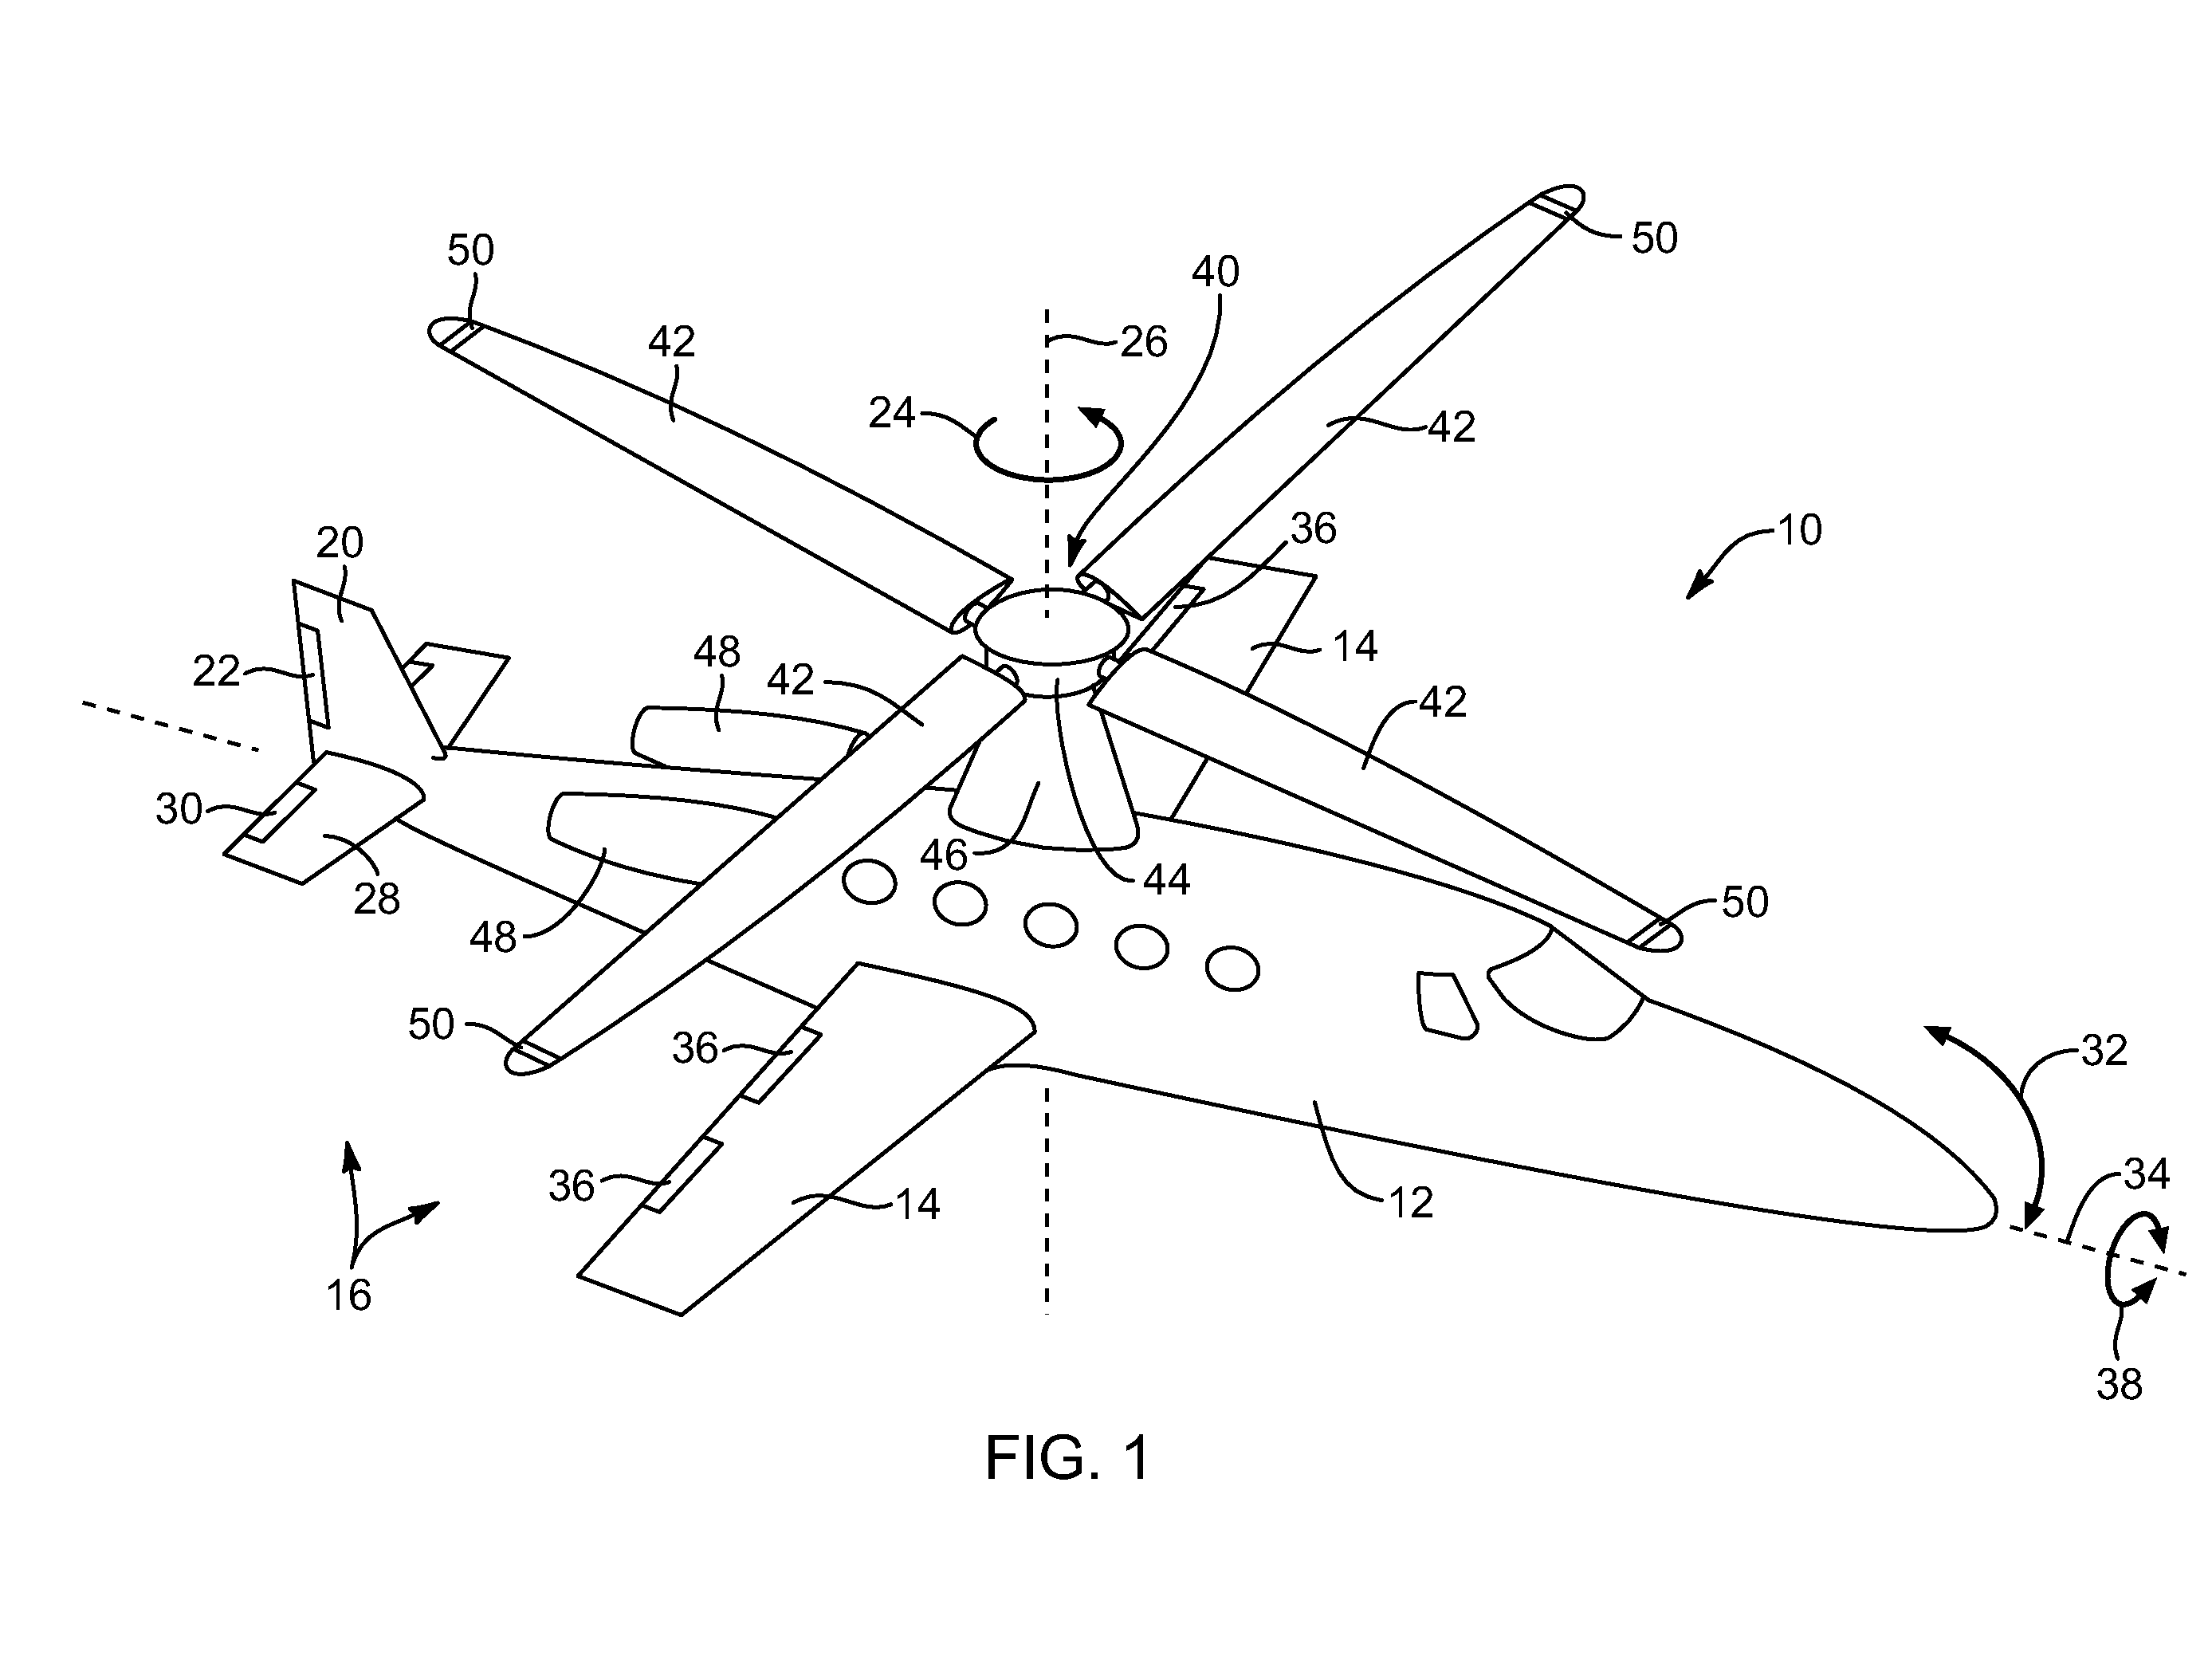 Mission-adaptive rotor blade